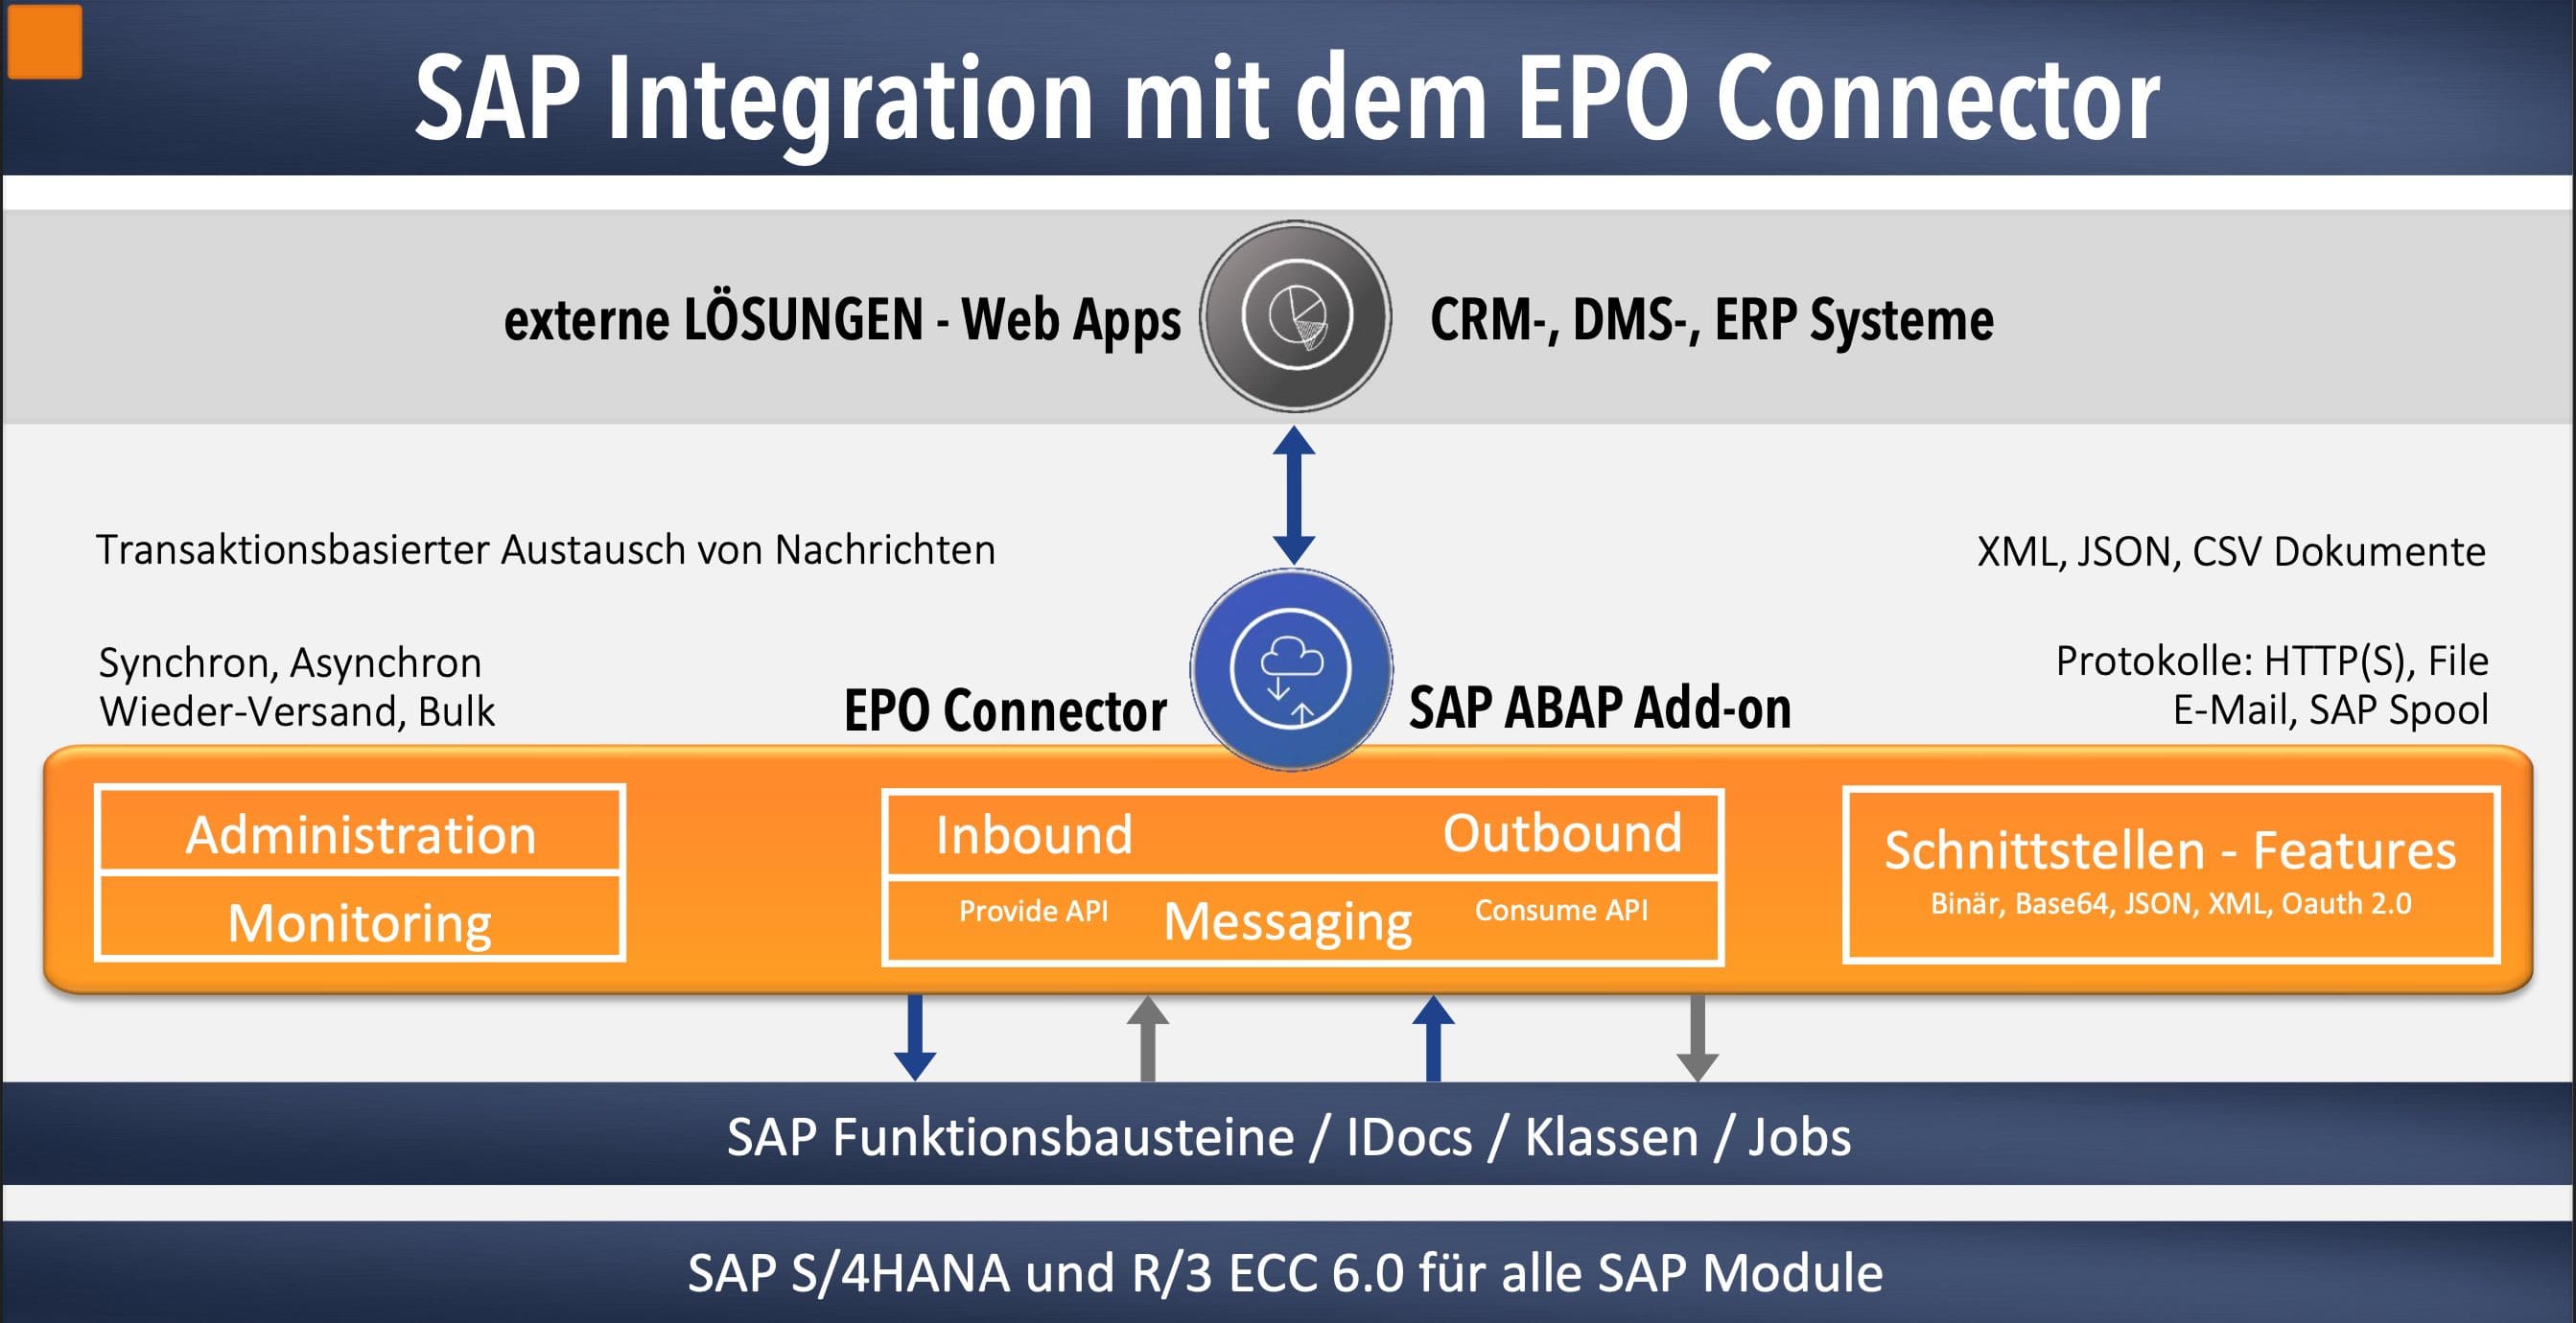 SAP Integration mit dem EPO Connector